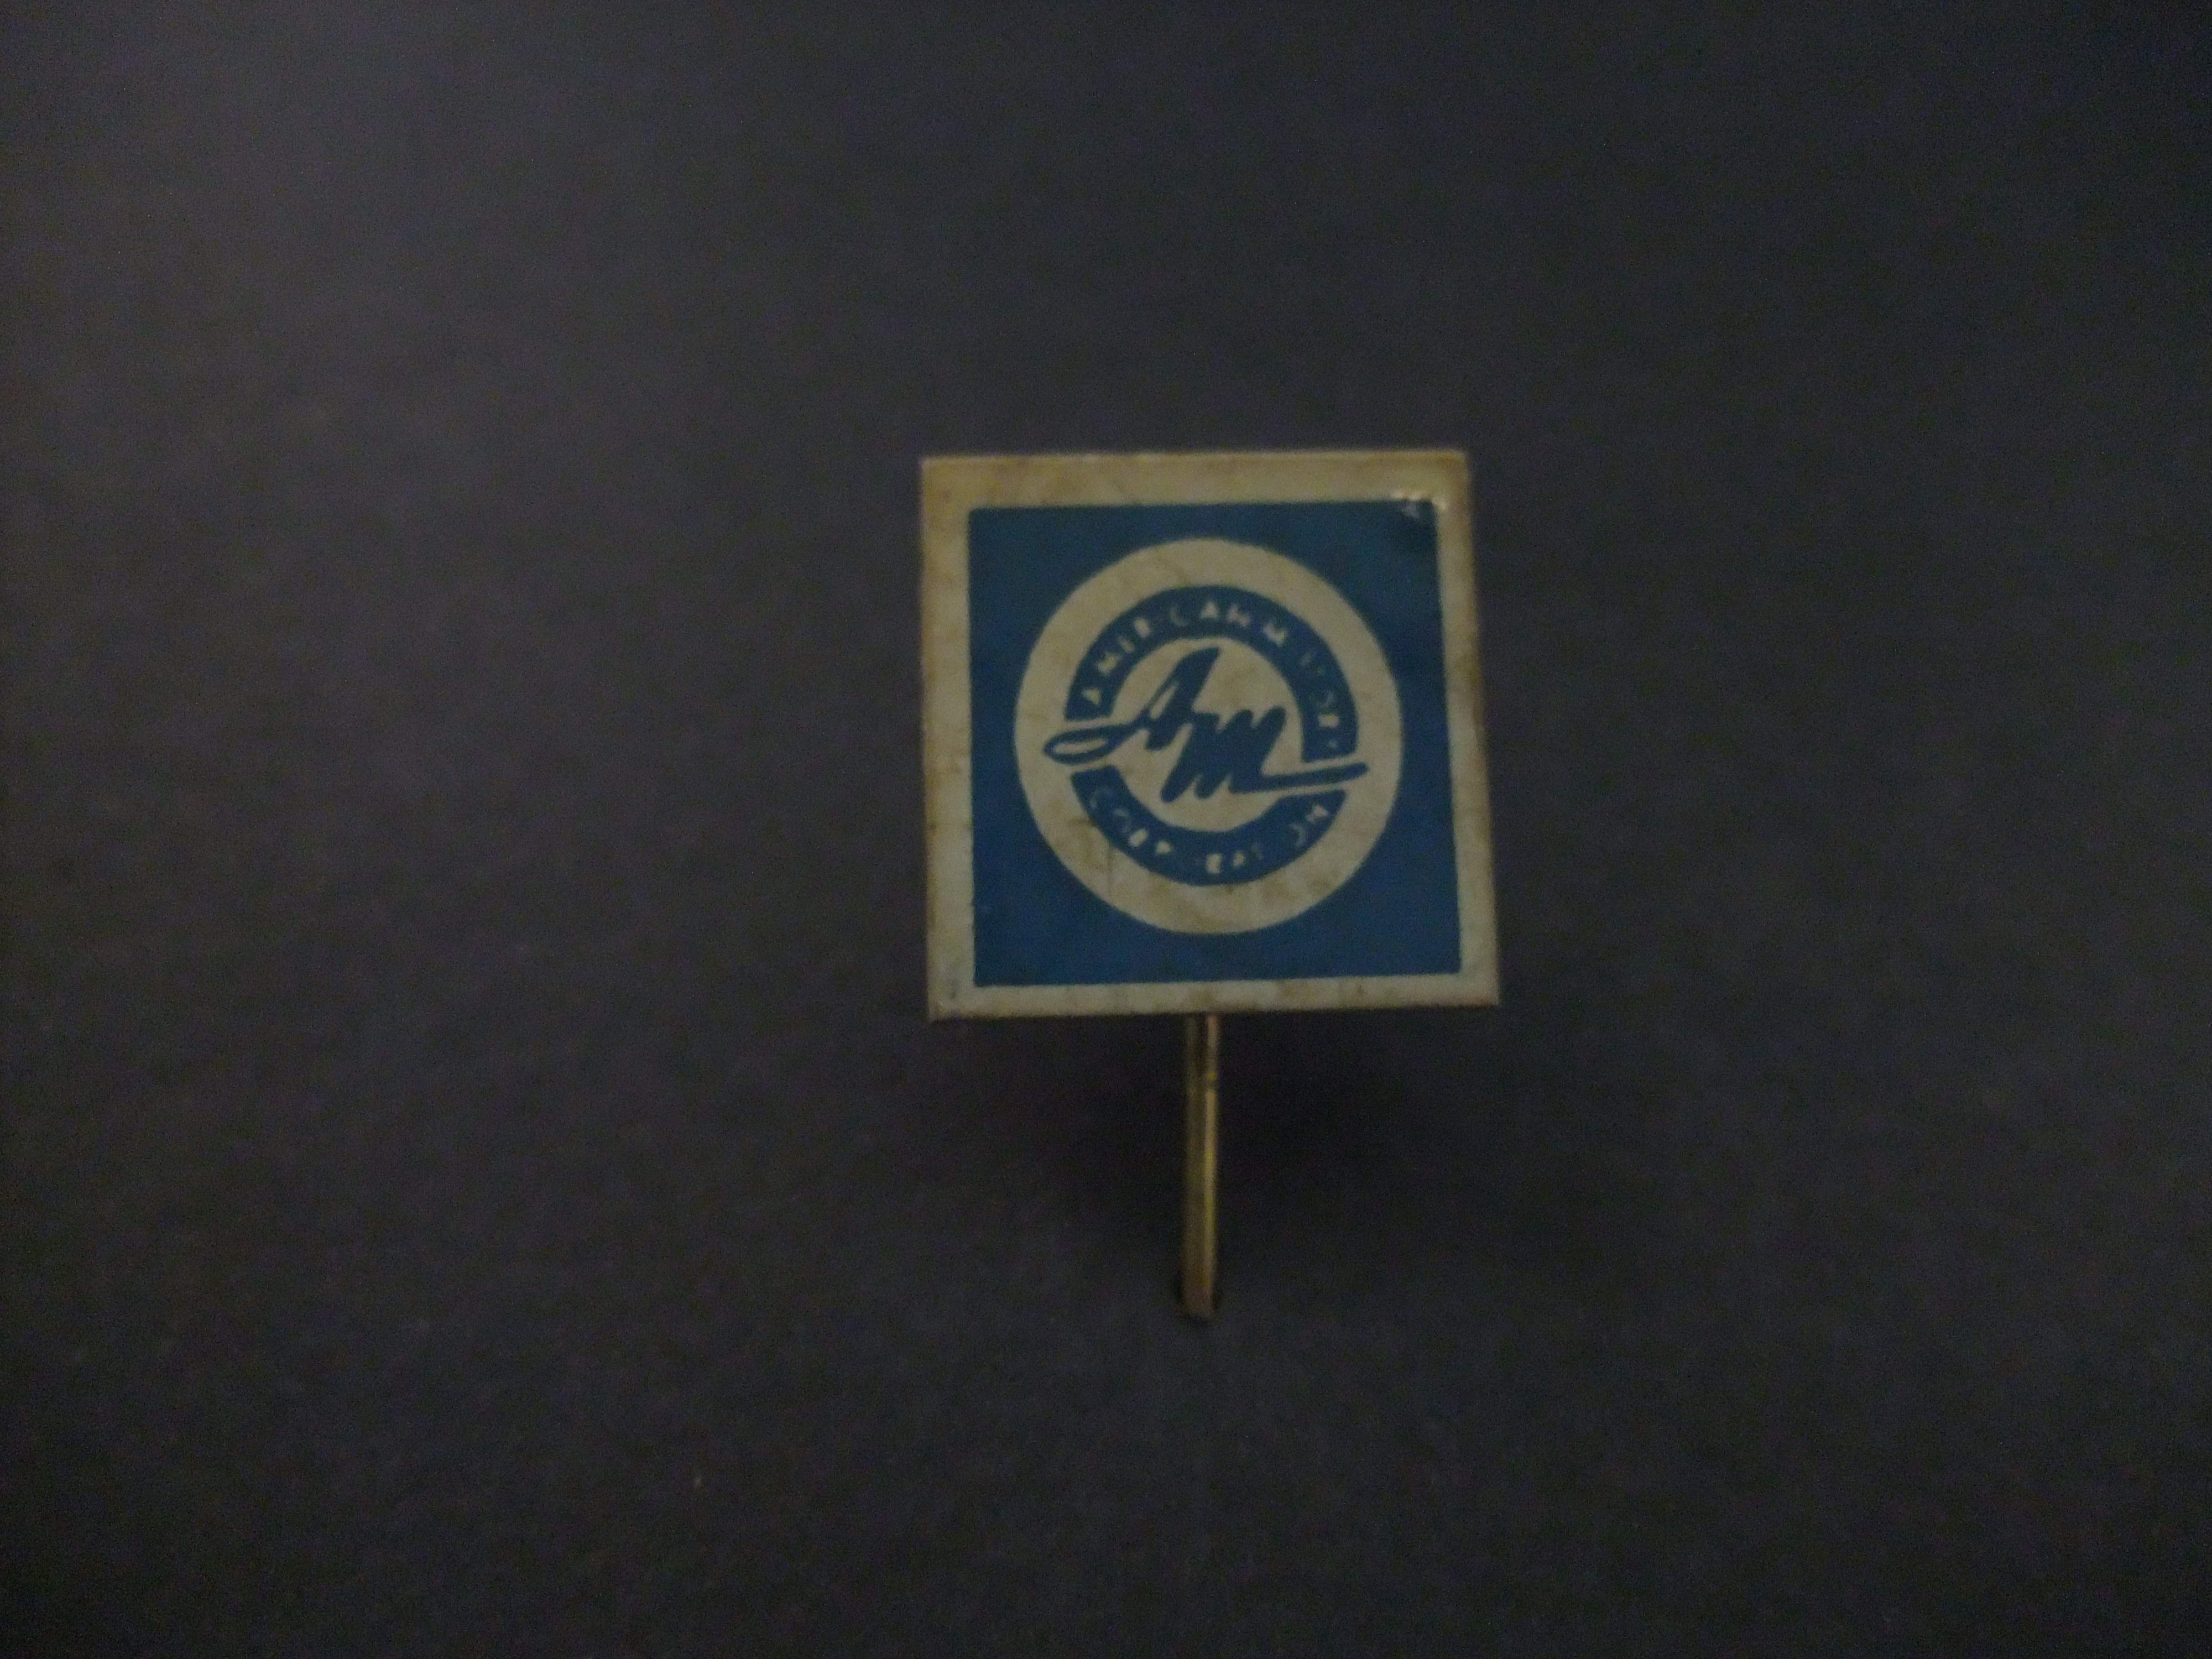 ( AM) American Motors Corporation (autofabrikant)blauw logo